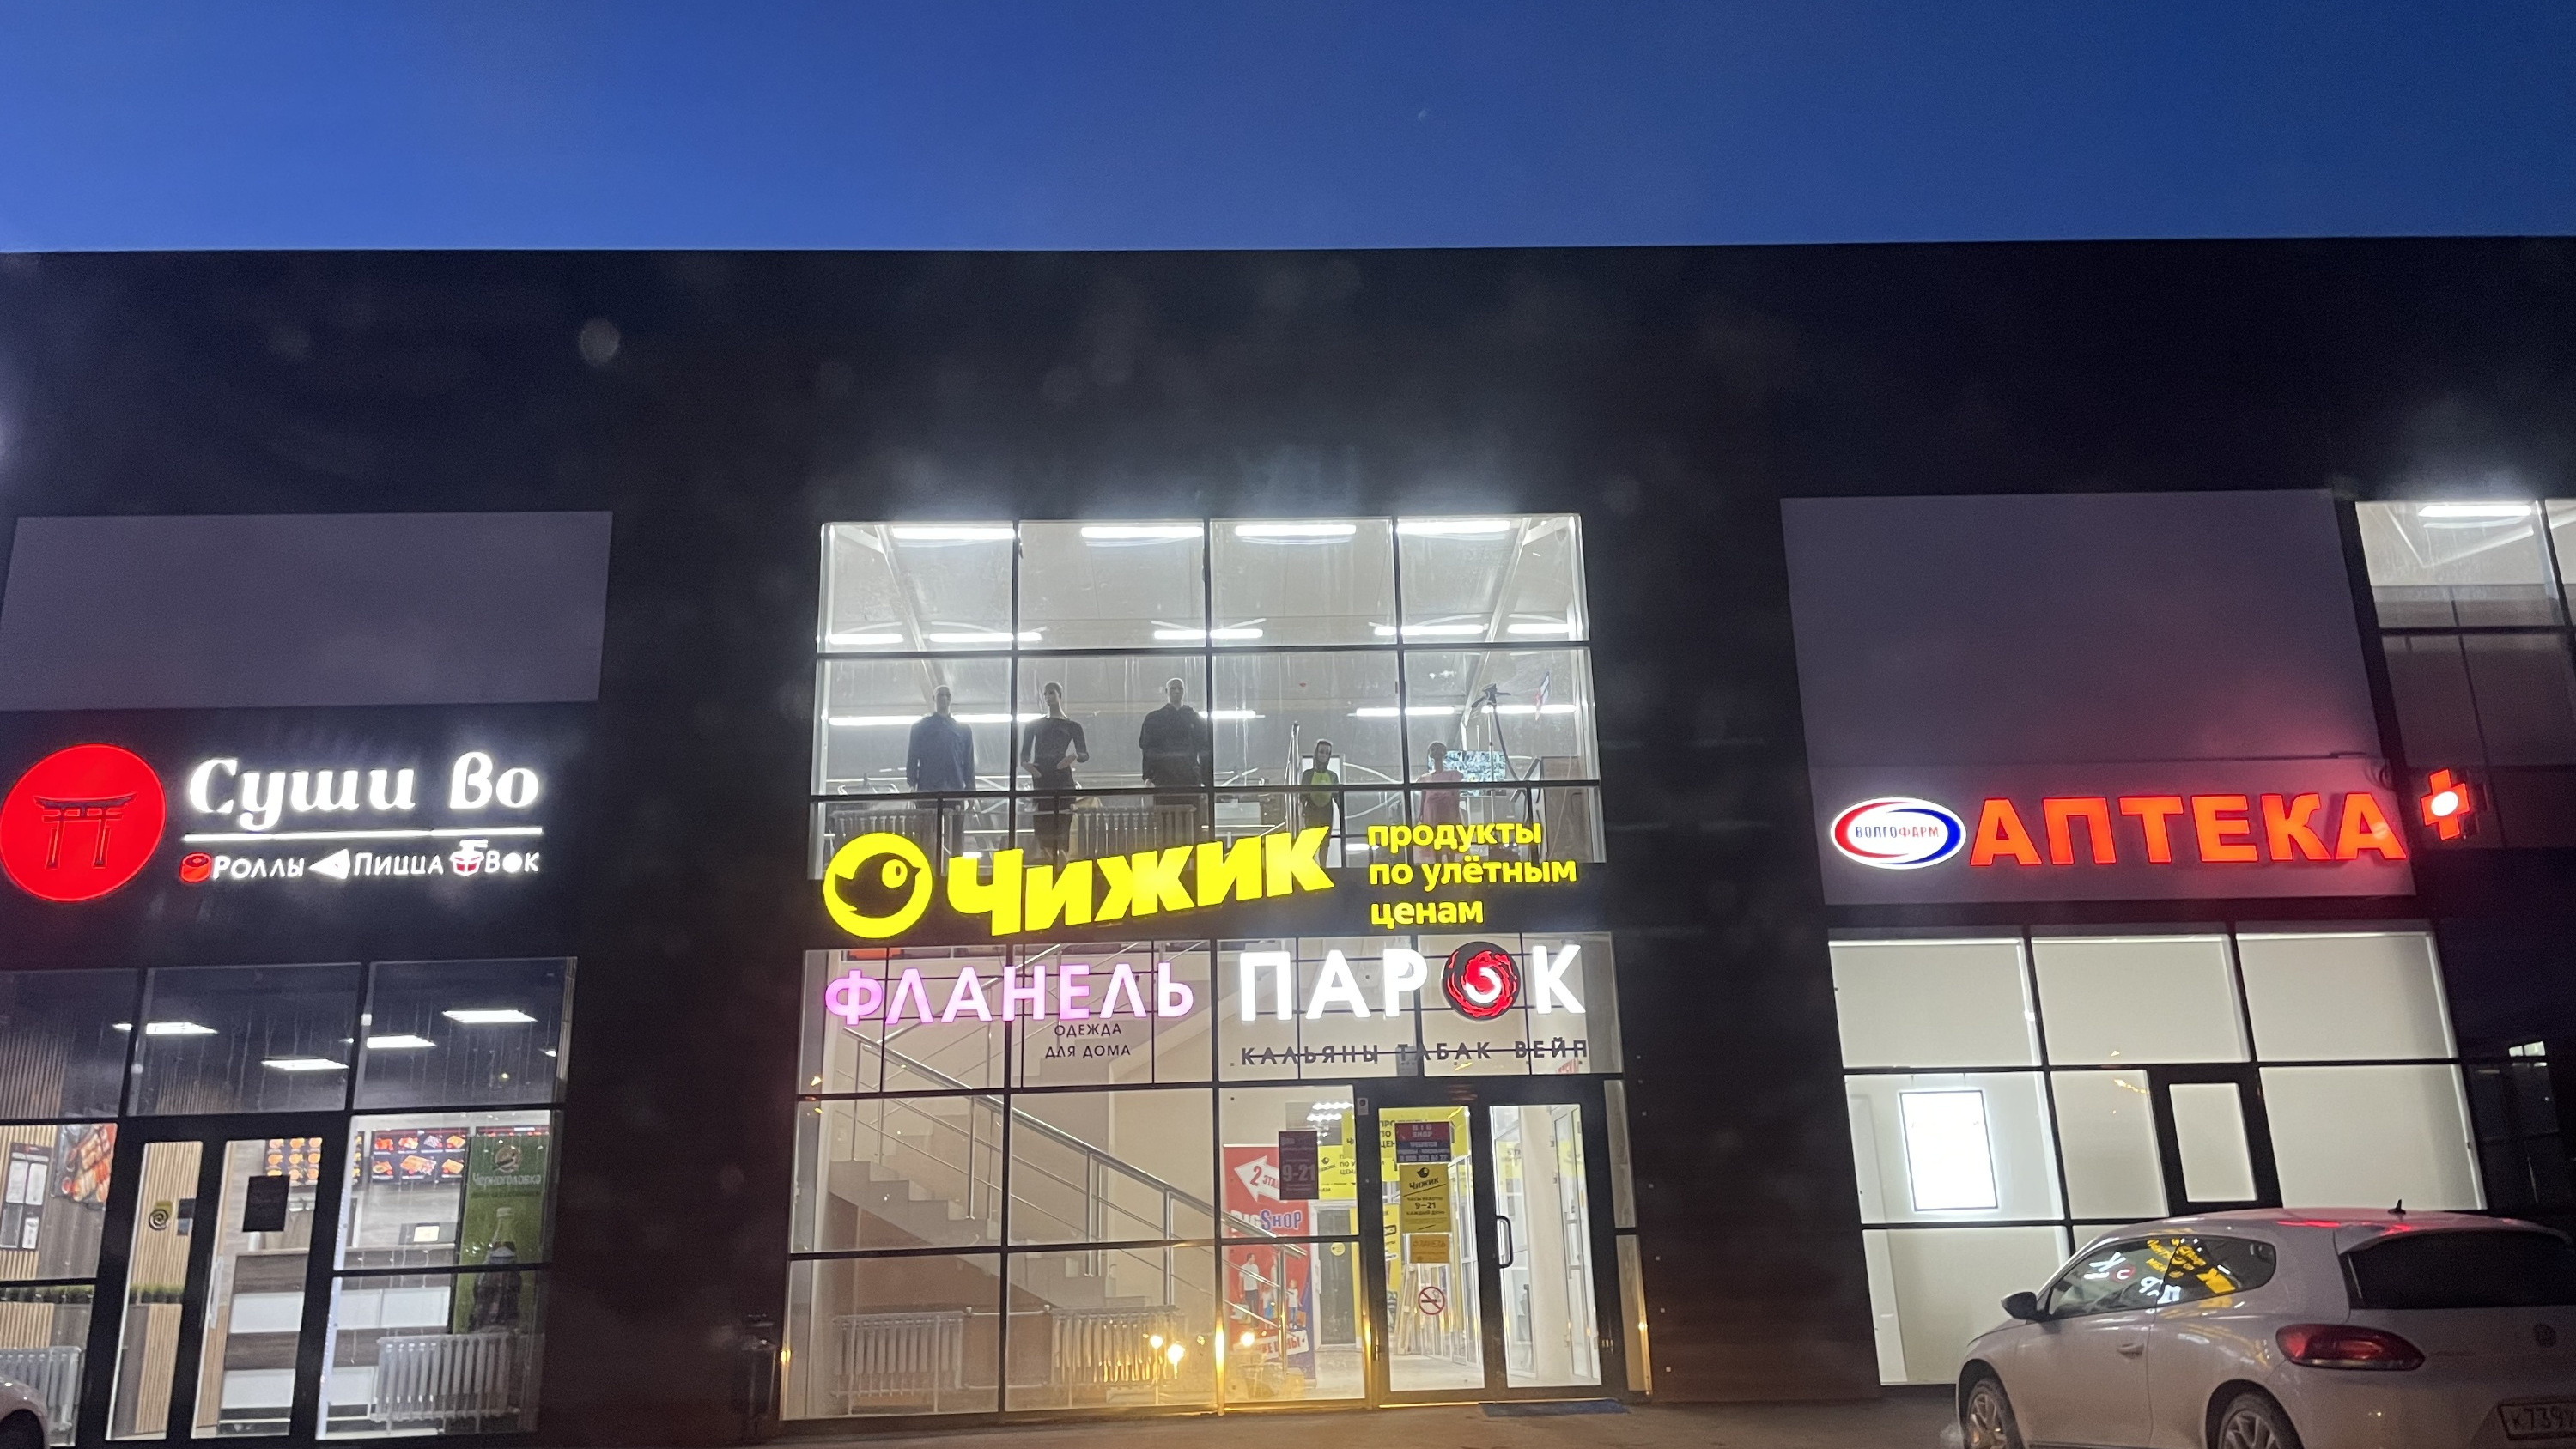 Минимум брендов, максимум неизведанного: репортаж из «Чижика» — нового супермаркета, захватившего Волгоград